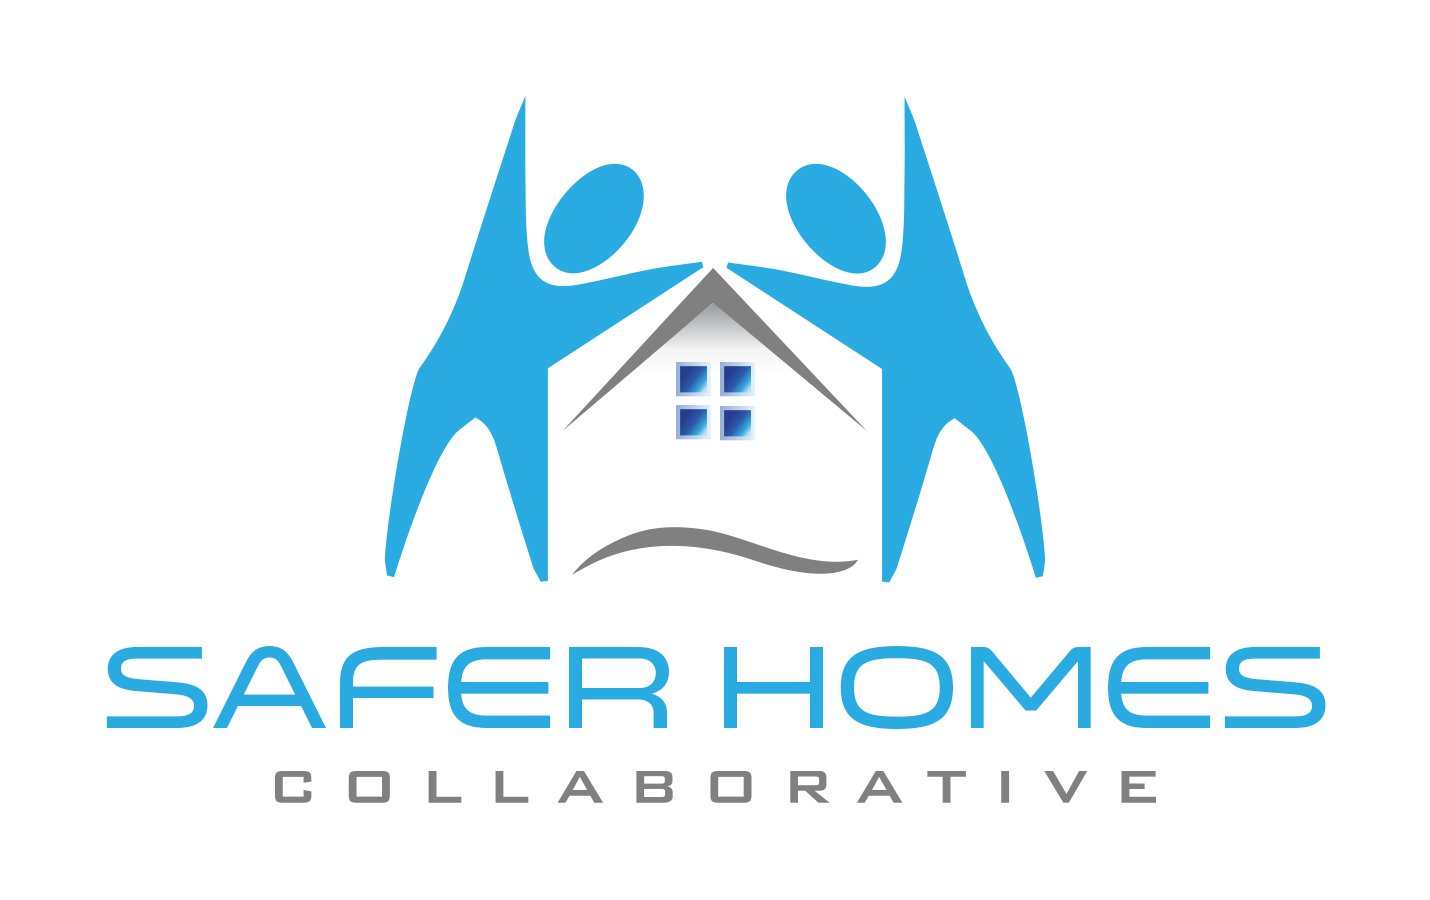 Safer Homes Collaborative